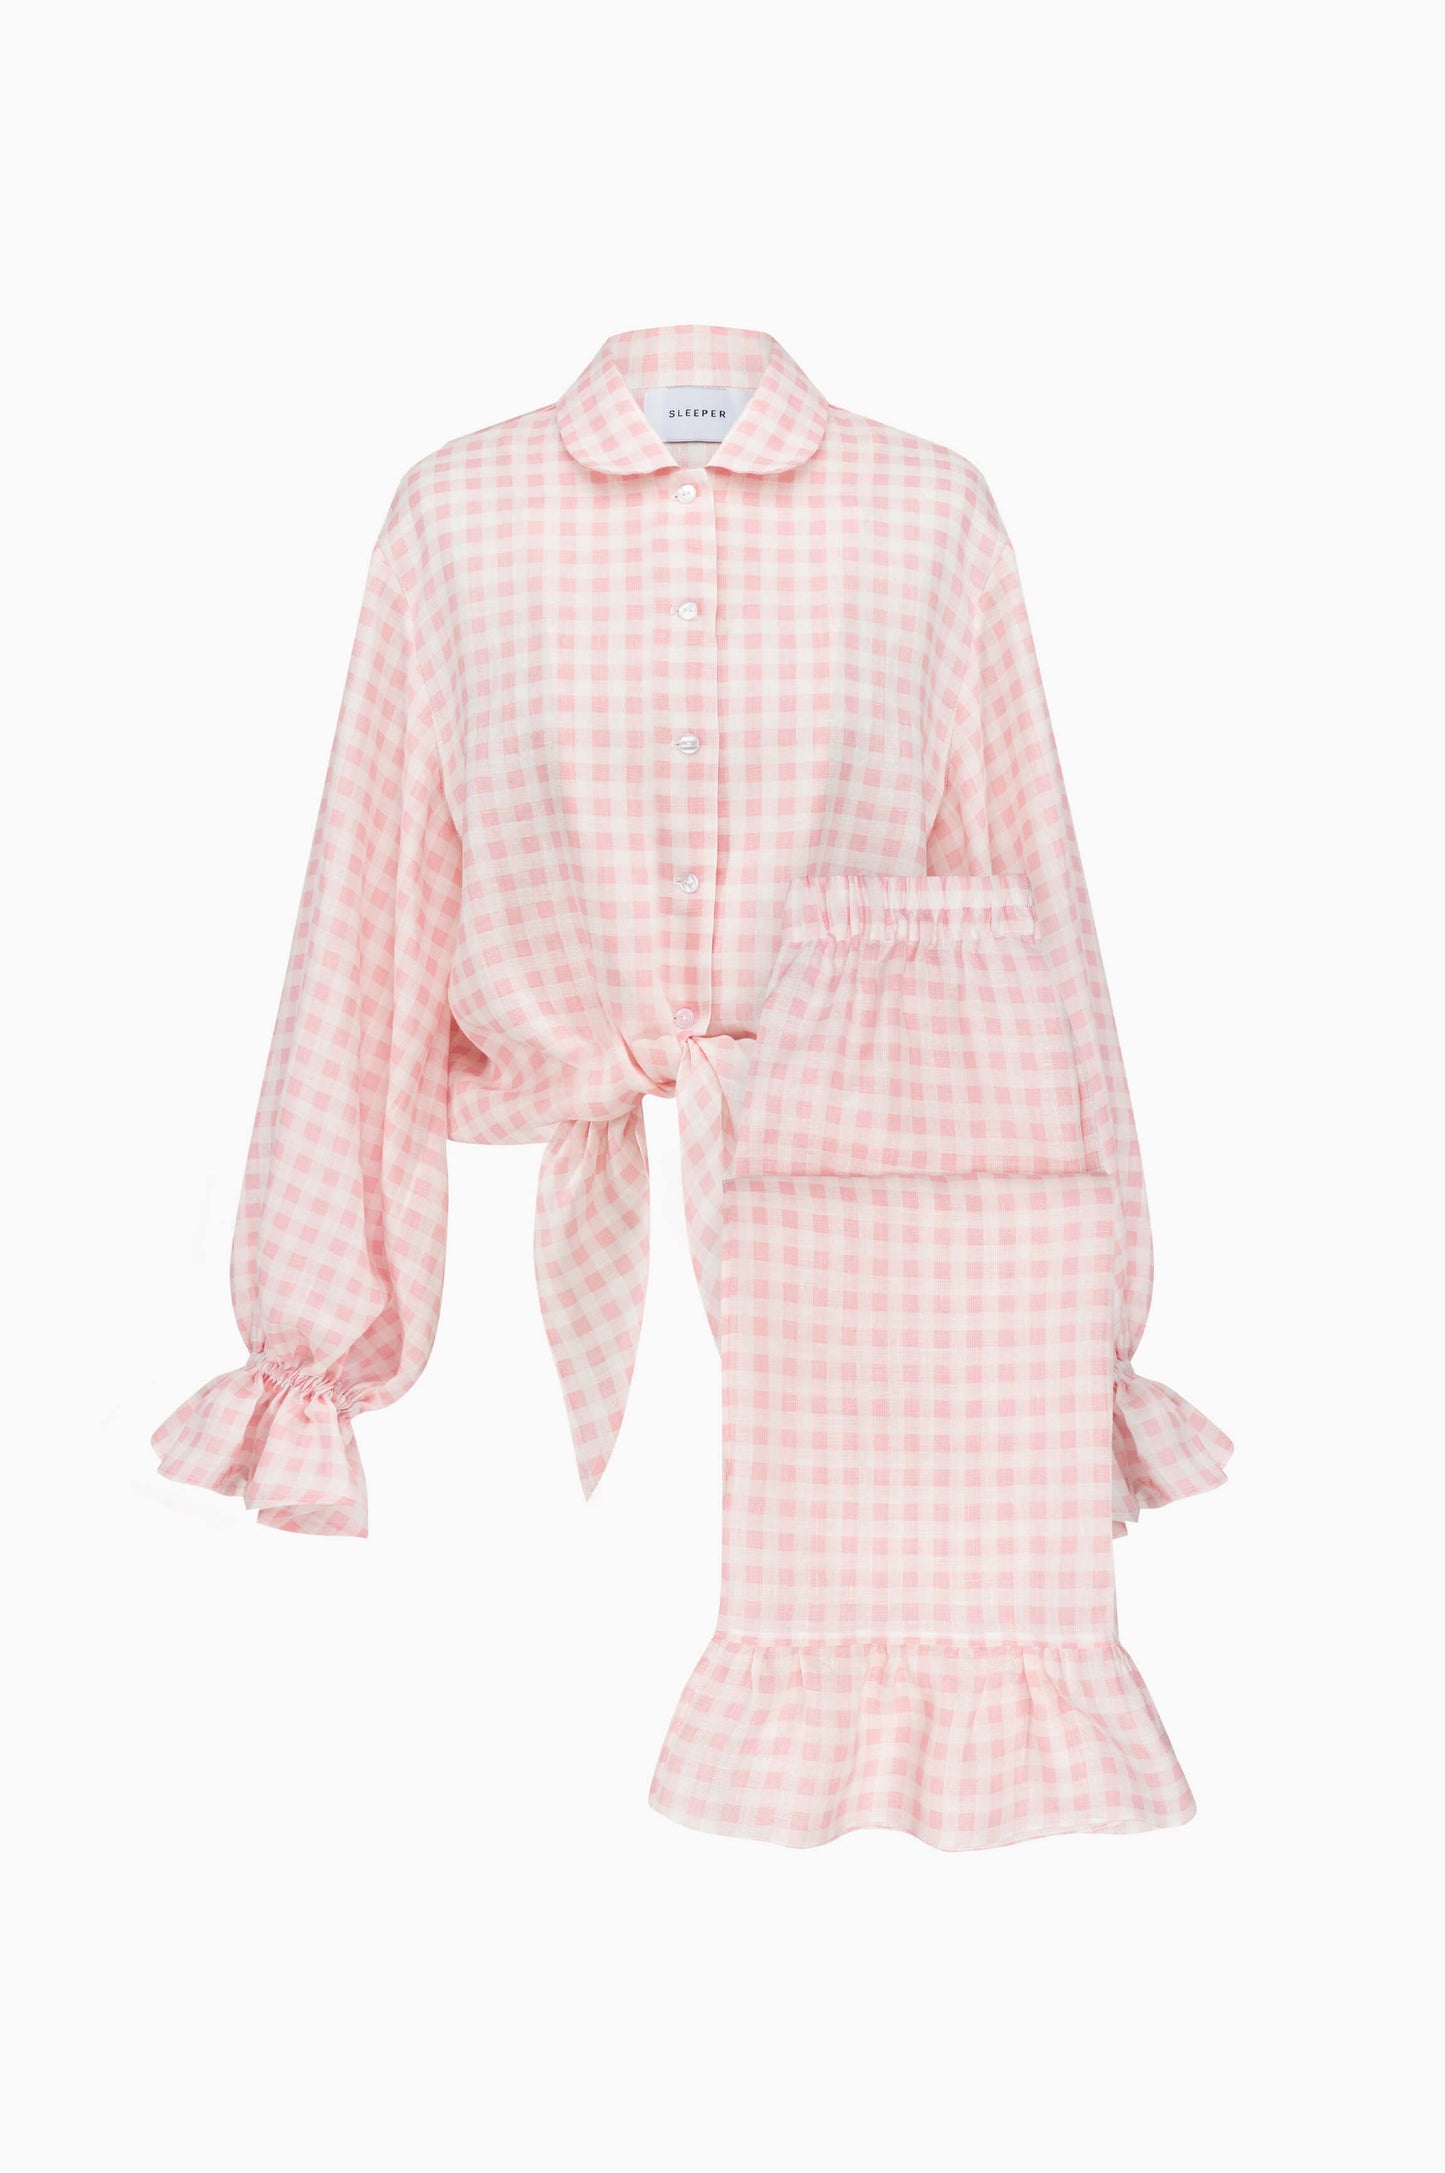 Rumba Linen Lounge Suit in Pink Vichy